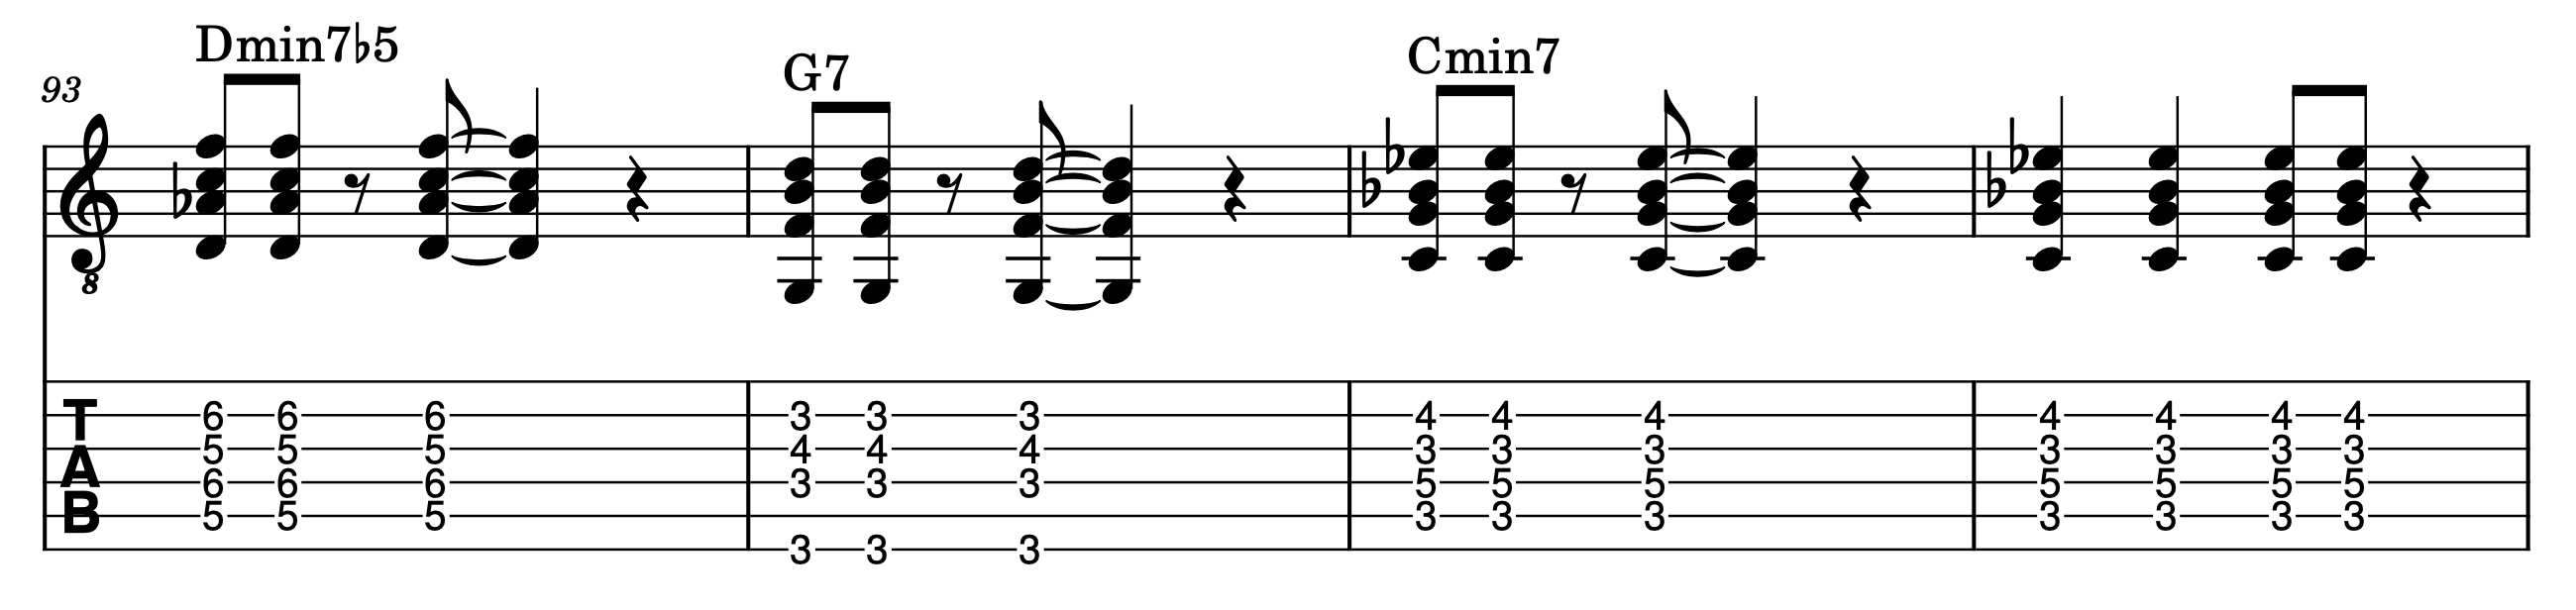 27a - 2 5 1 jazz chord progressions